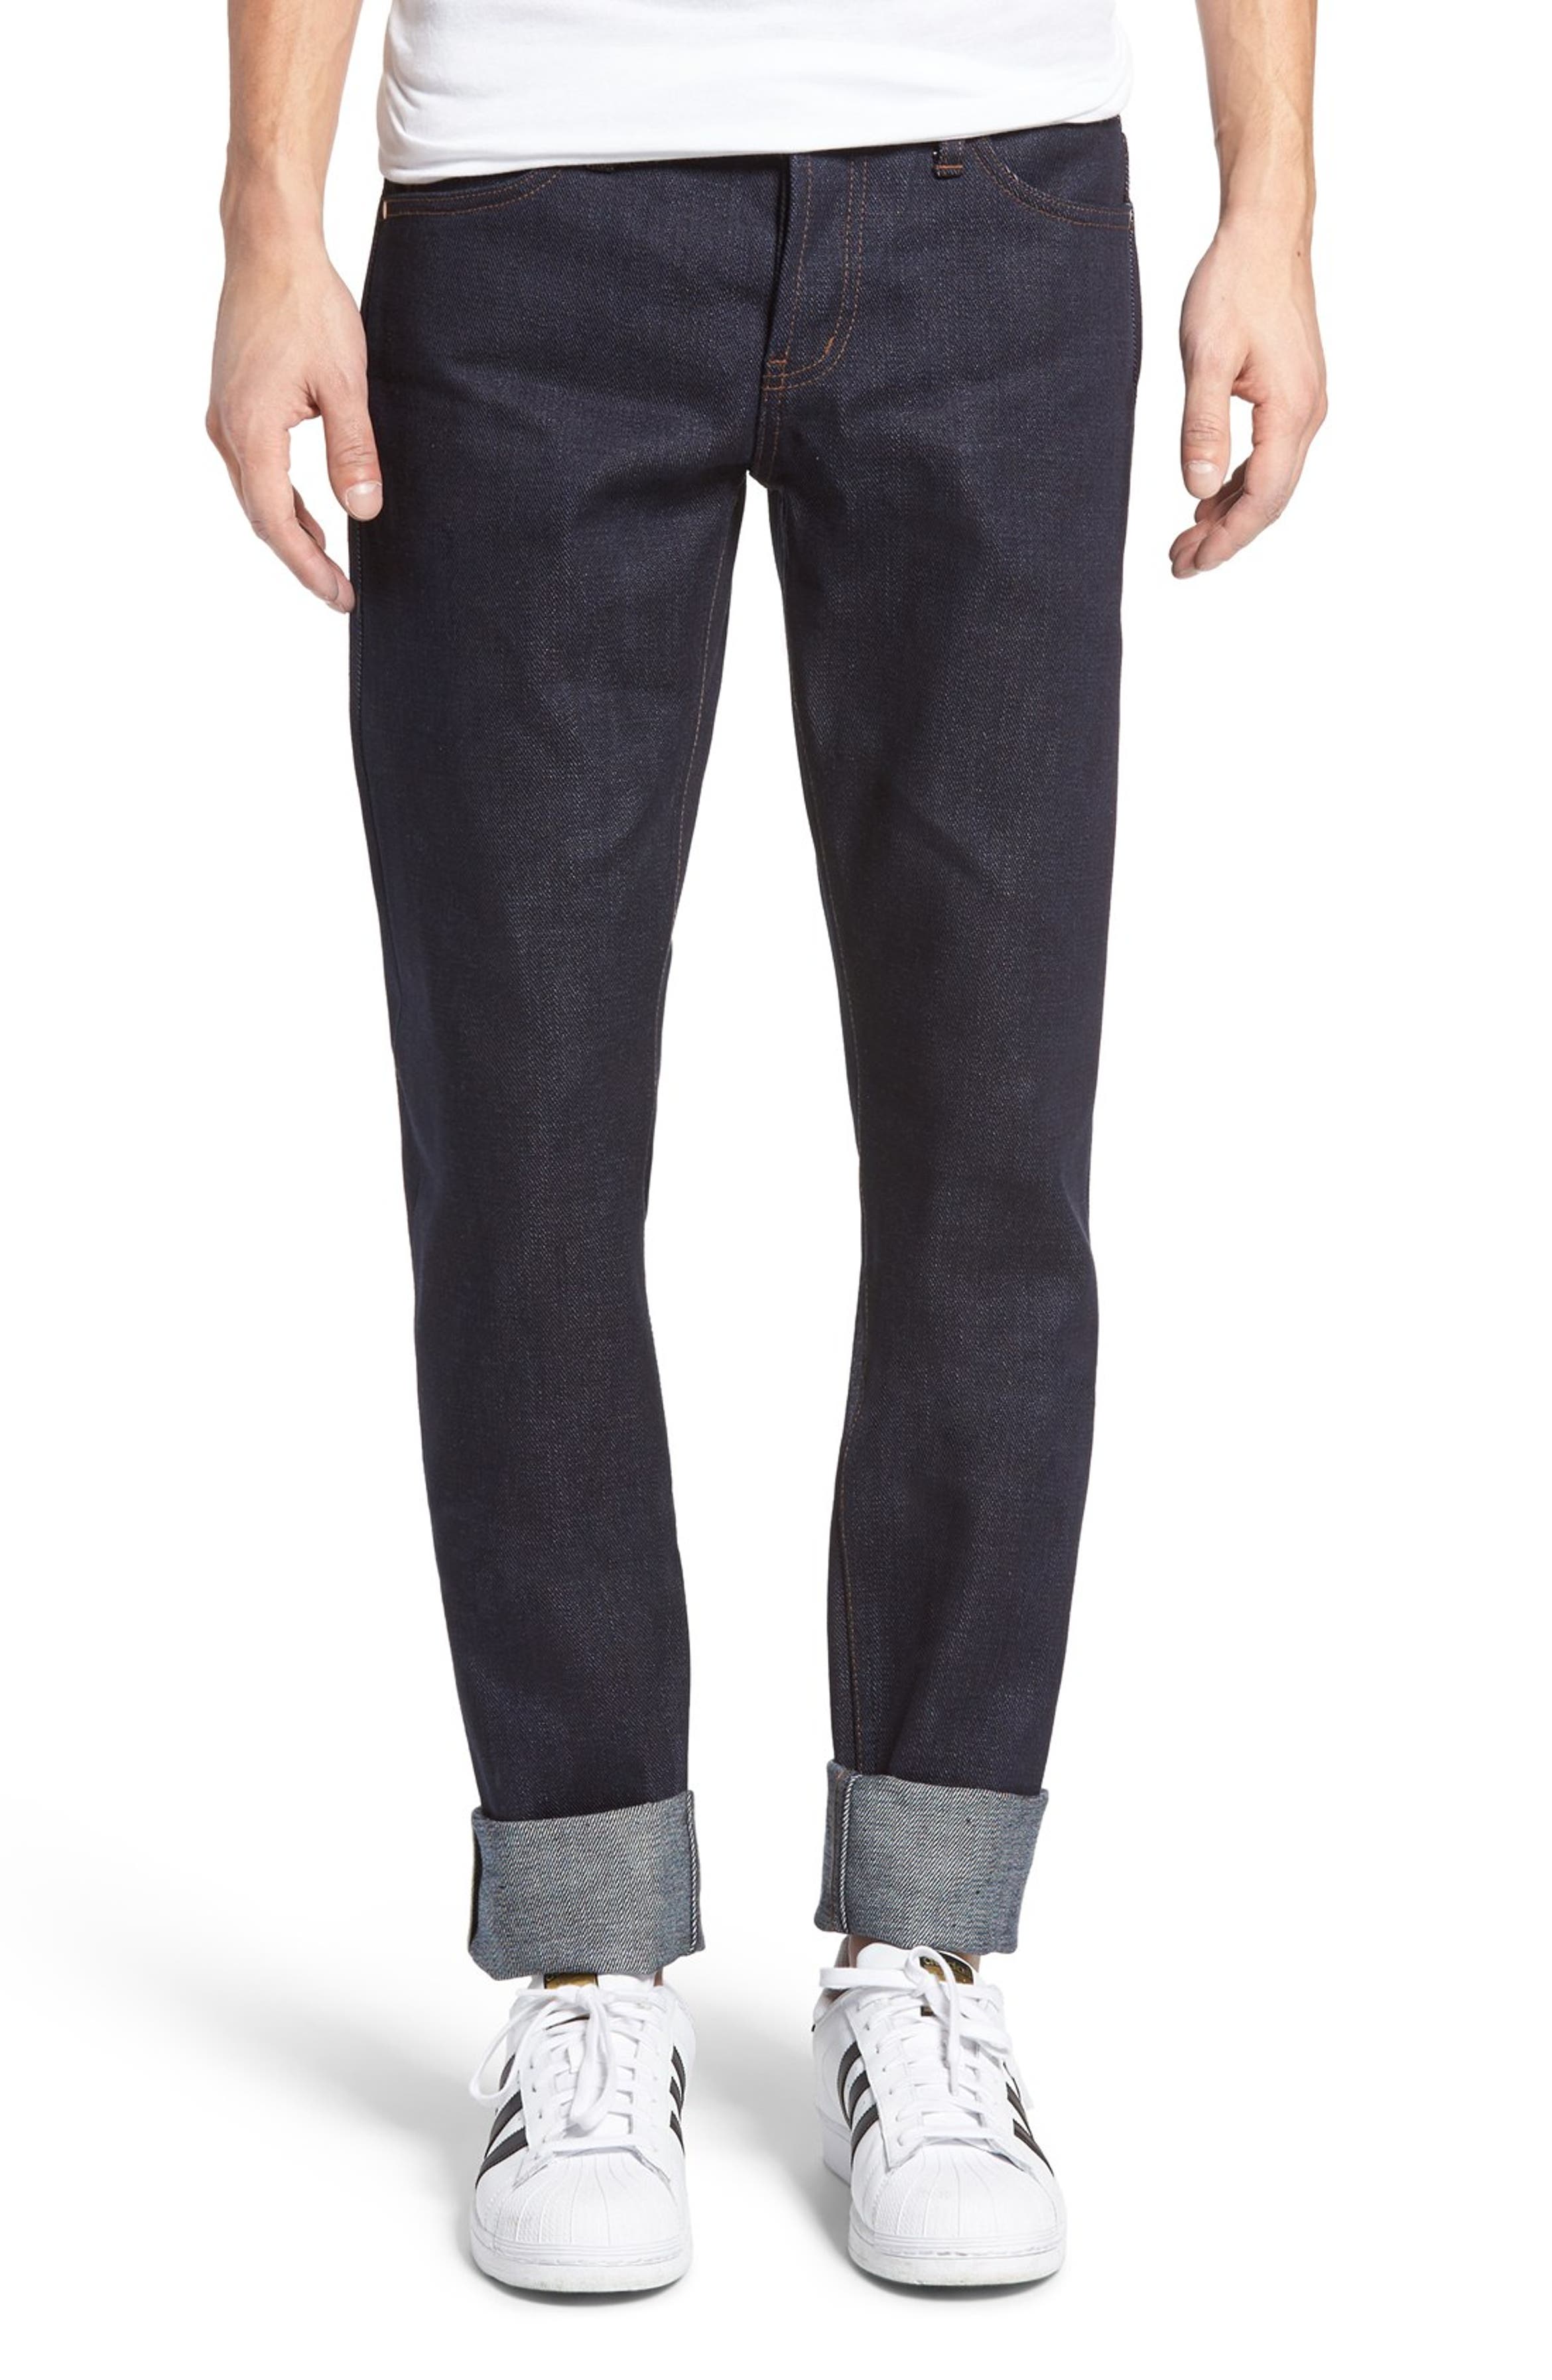 The Unbranded Brand UB121 Selvedge Skinny Fit Jeans | Nordstrom